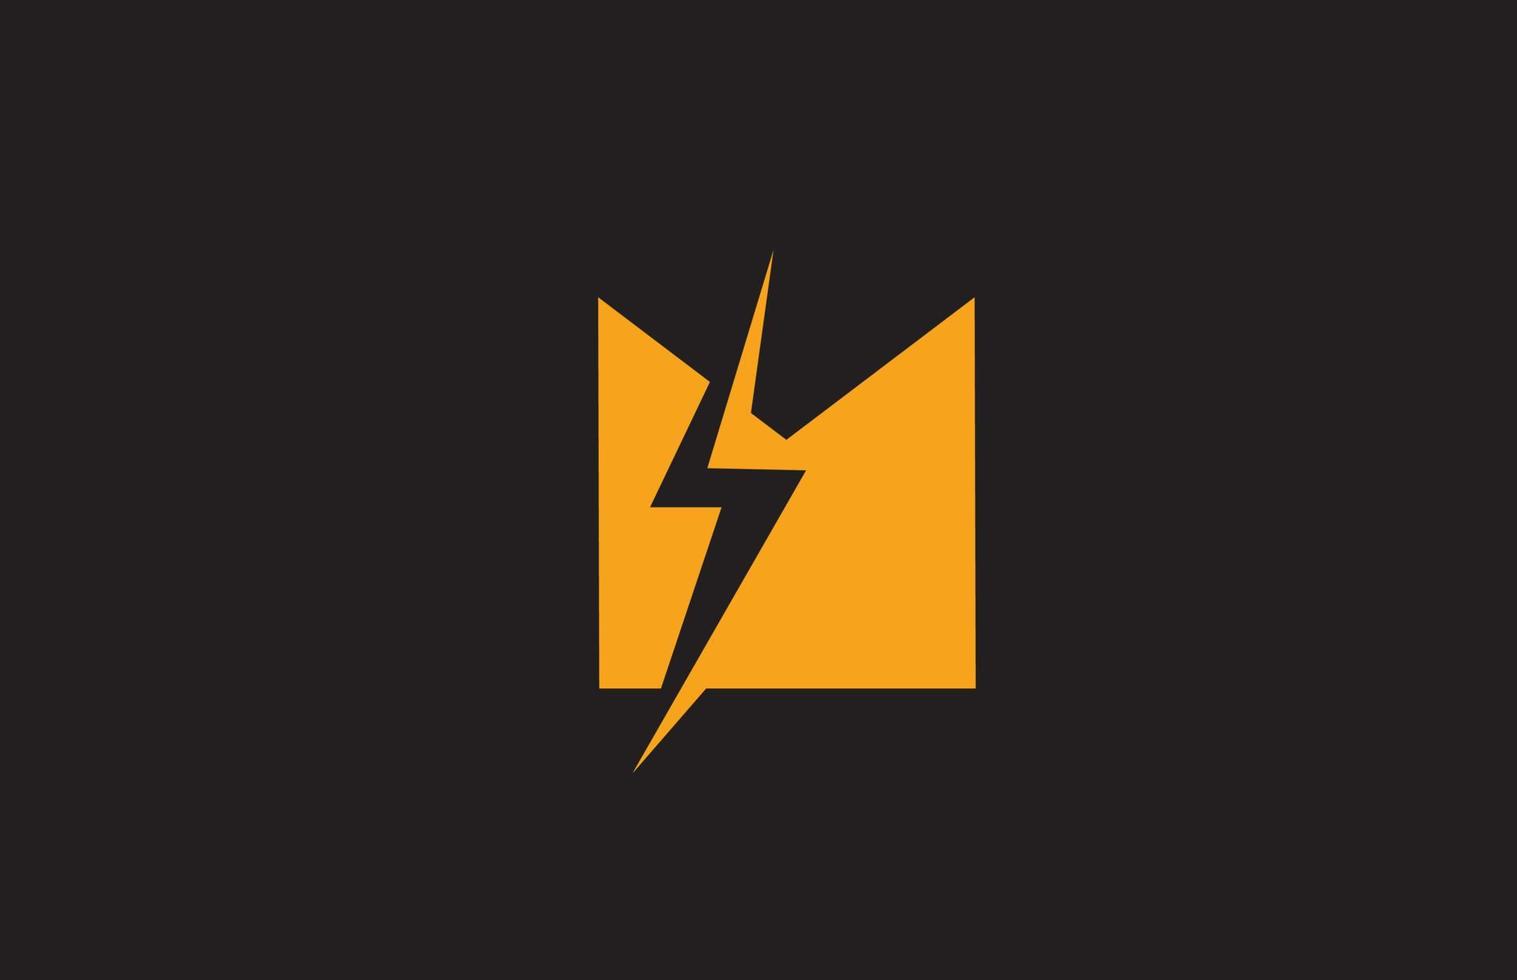 M yellow black alphabet letter logo icon. Electric lightning design for power or energy business vector